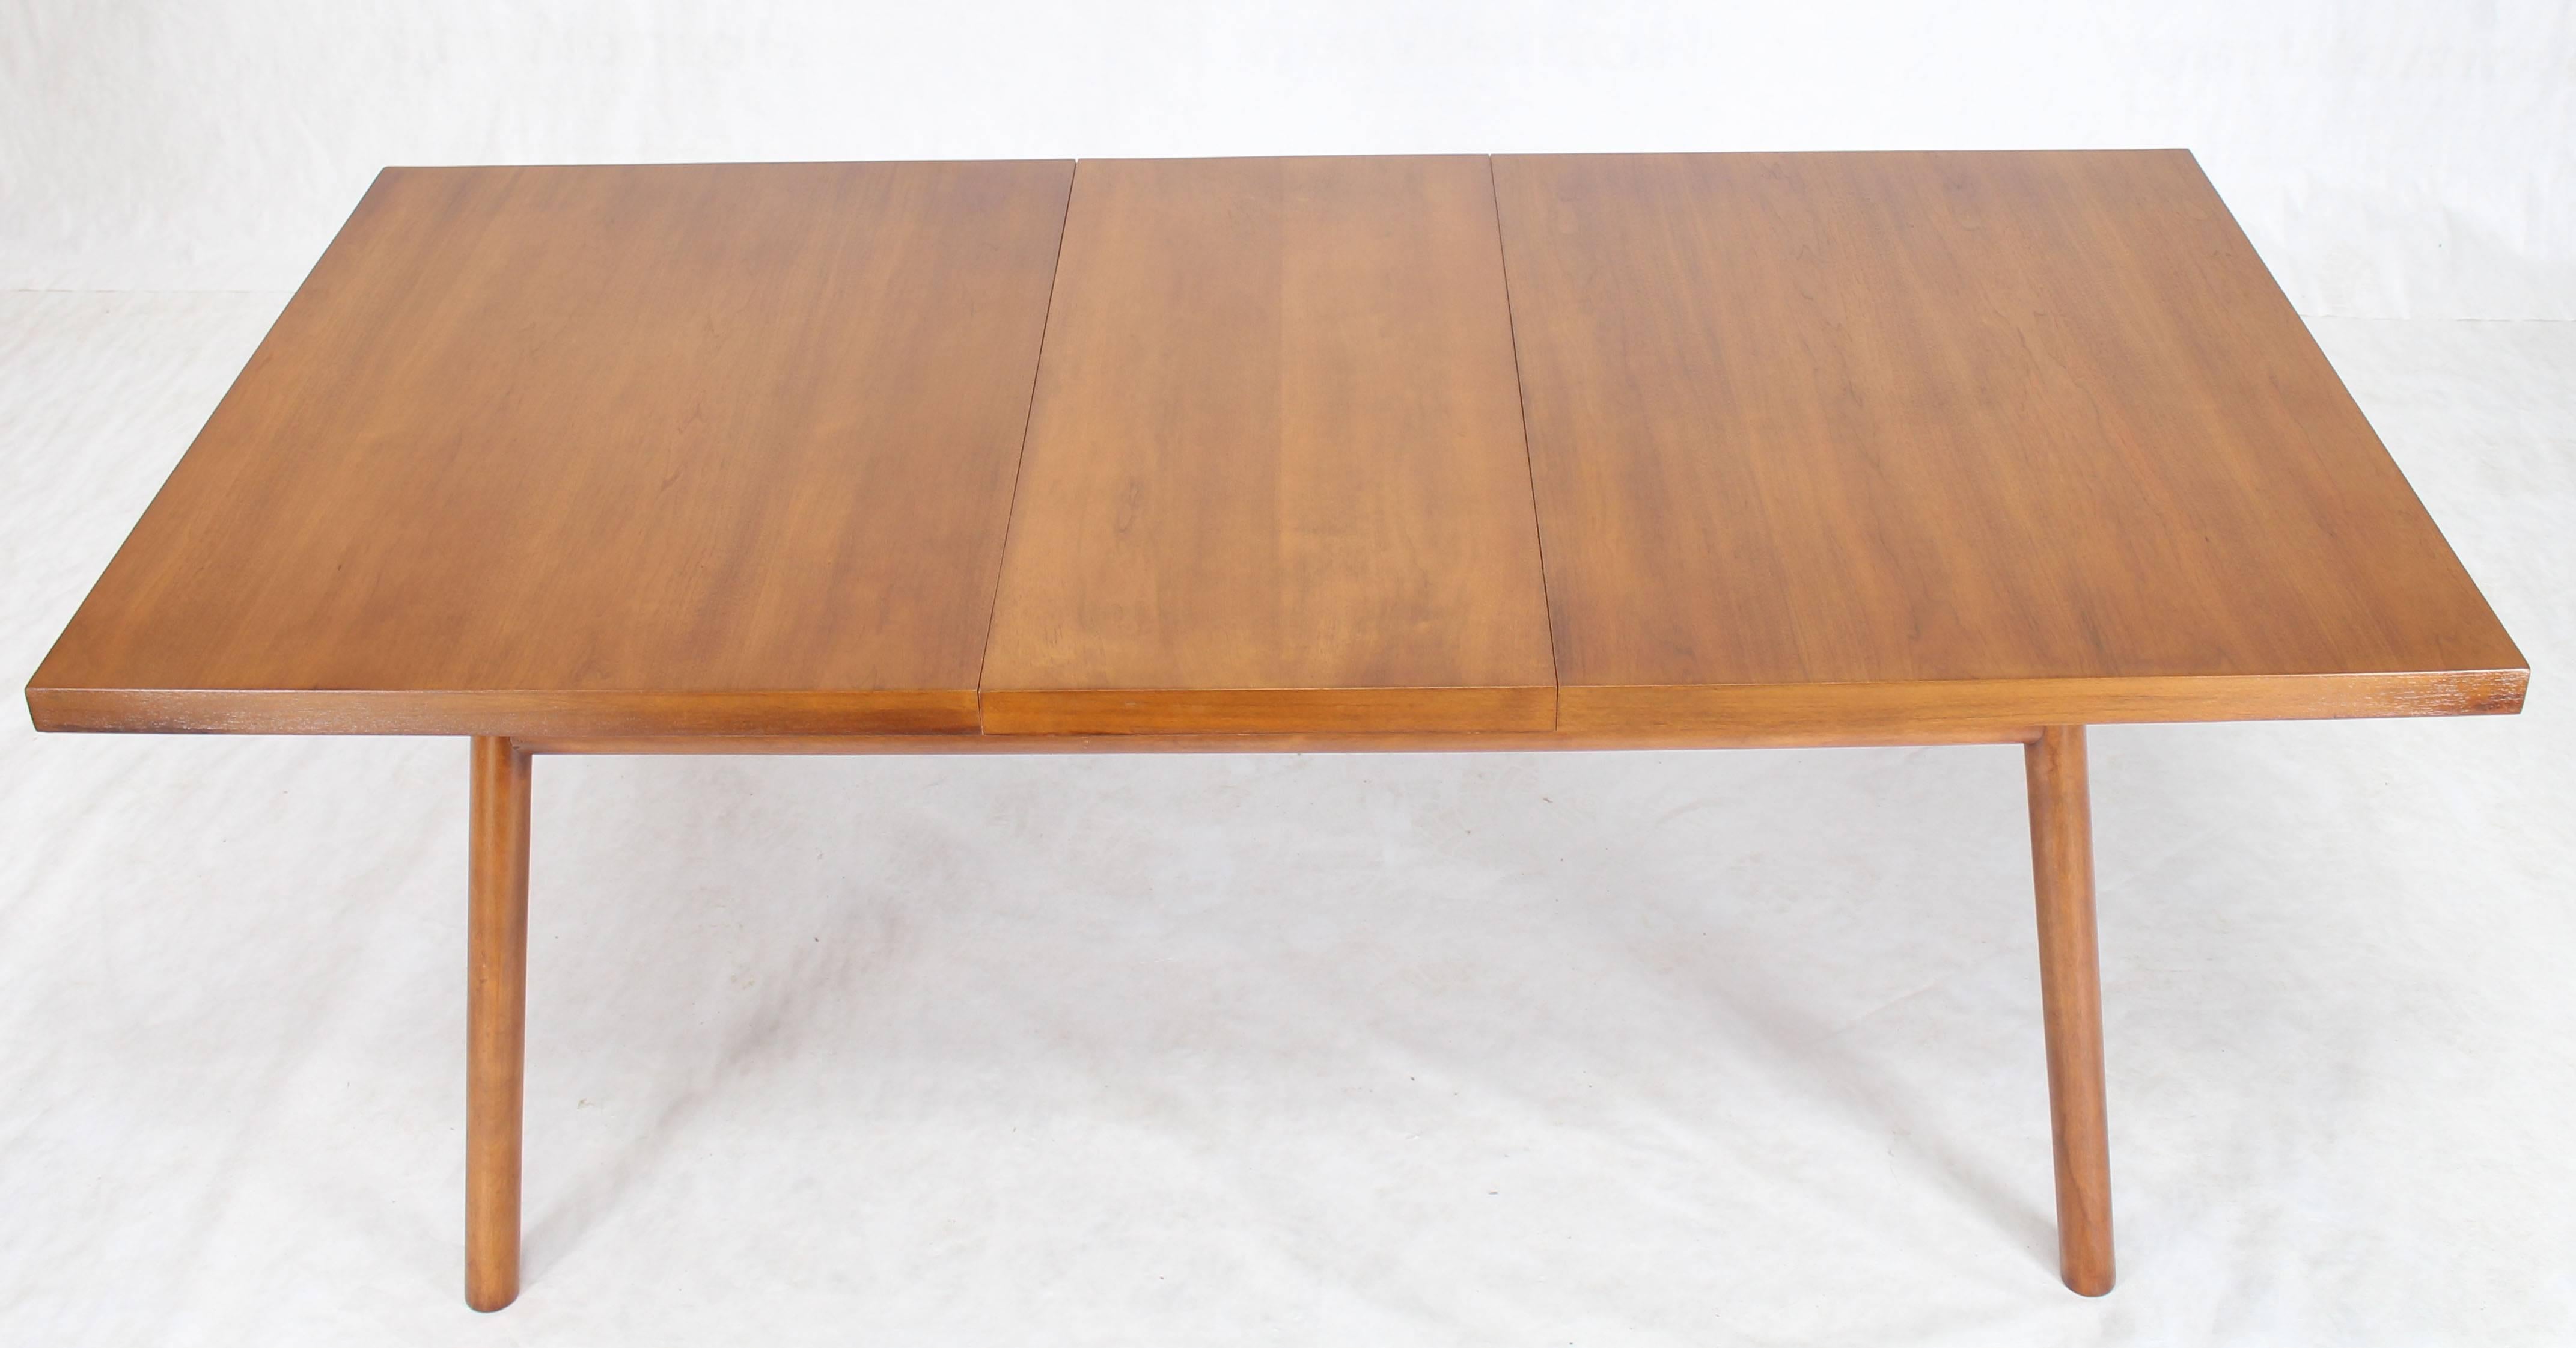 Mid-Century Modern walnut dining table designed by Robsjohn-Gibbings for Widdicomb. Measures: 1 x 18